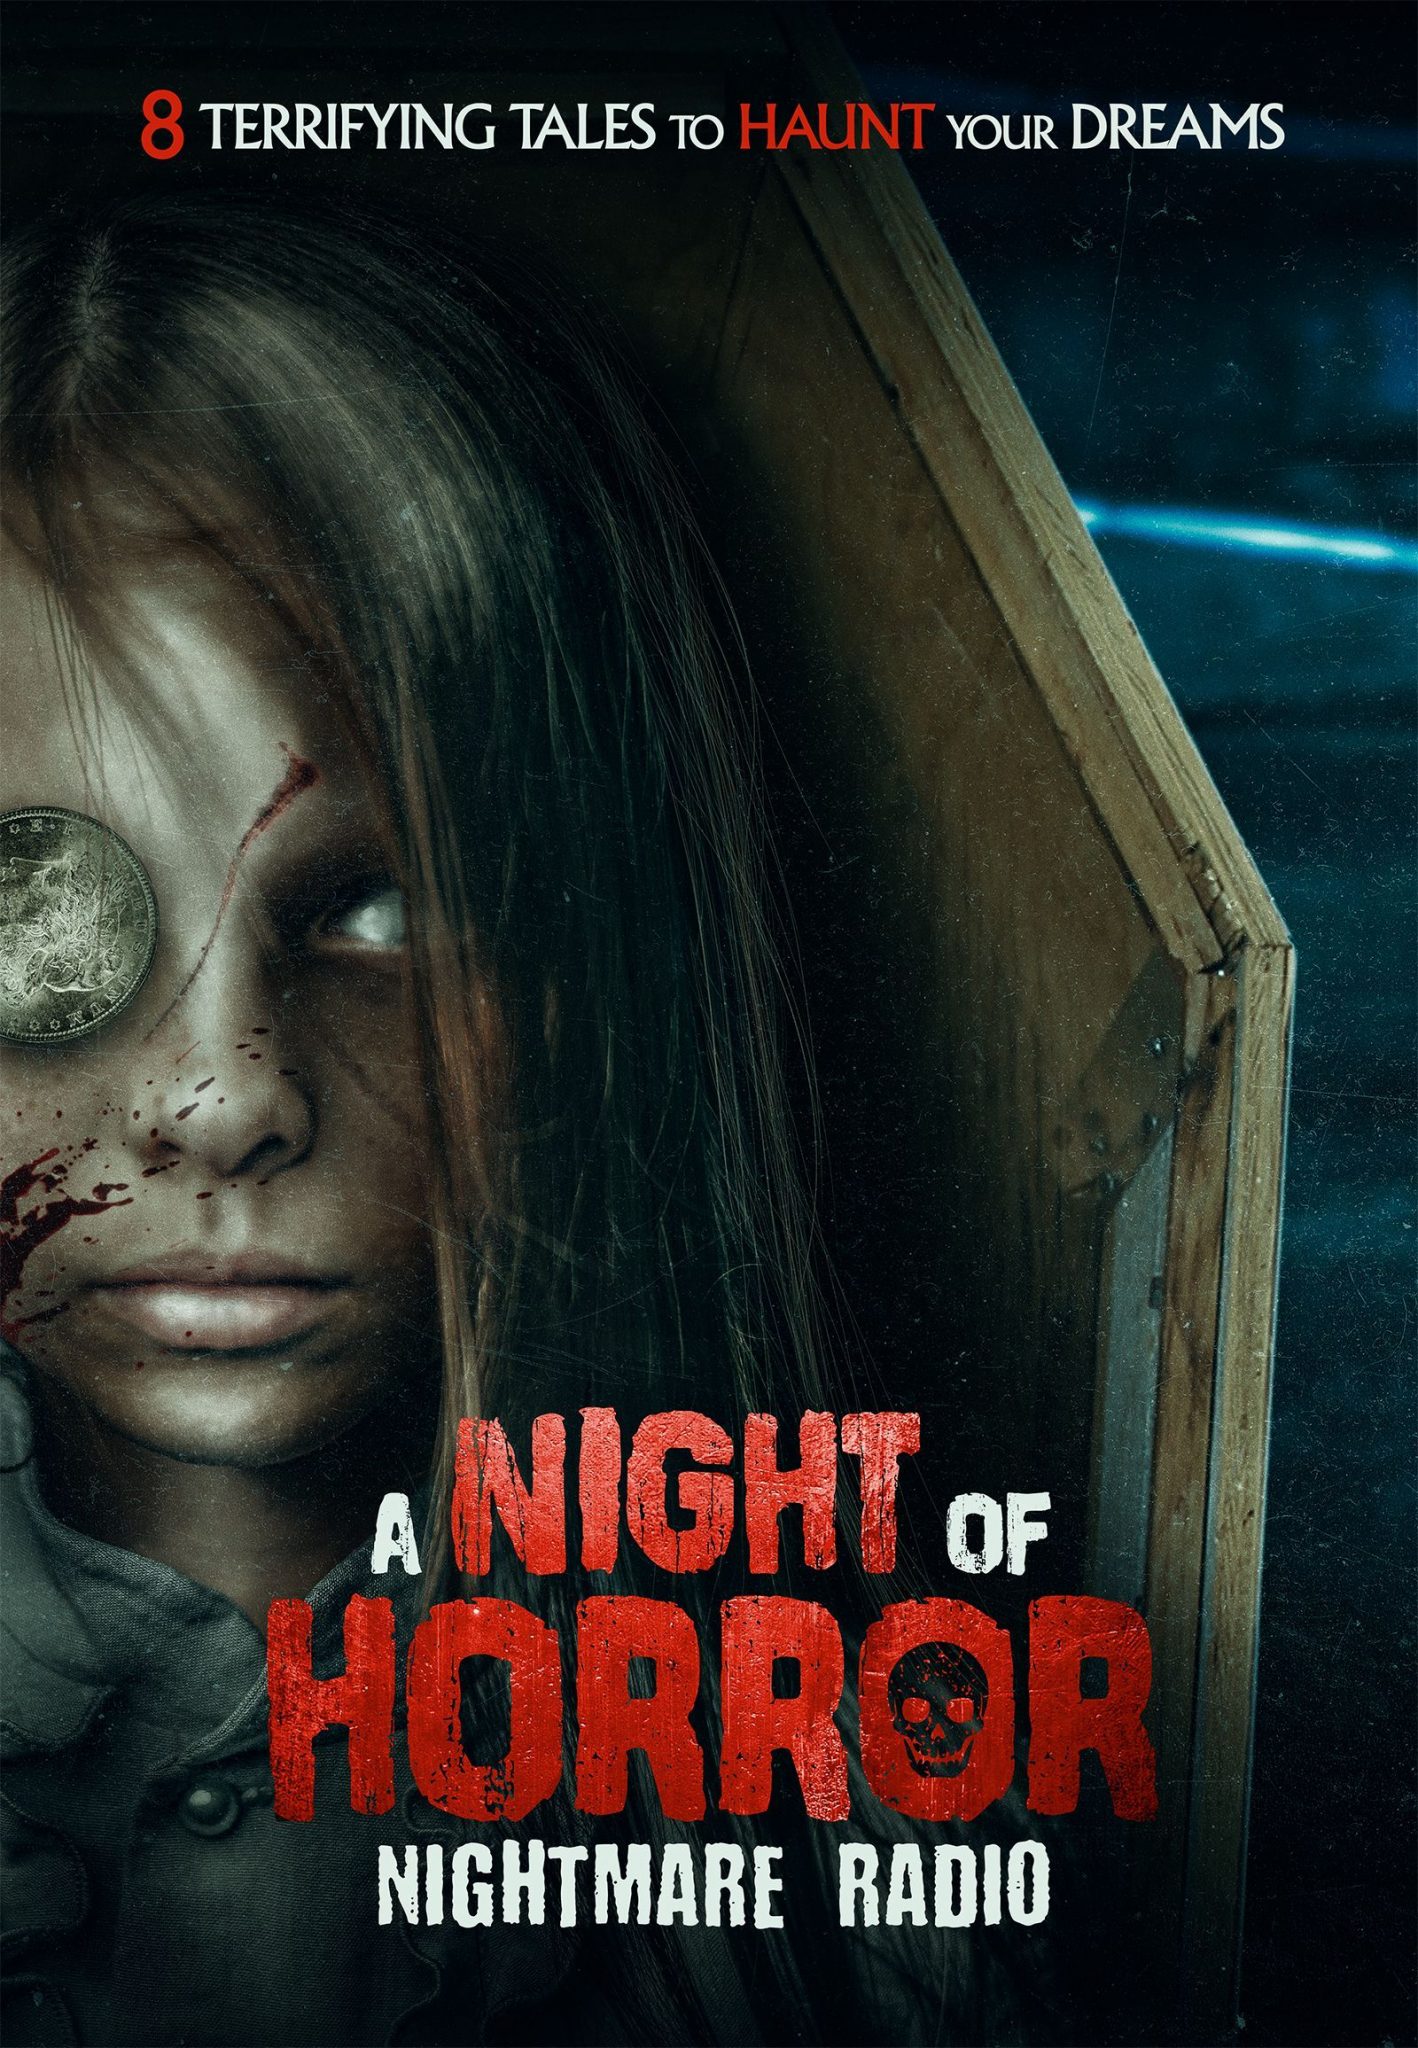 Night of horror nightmare radio affiche